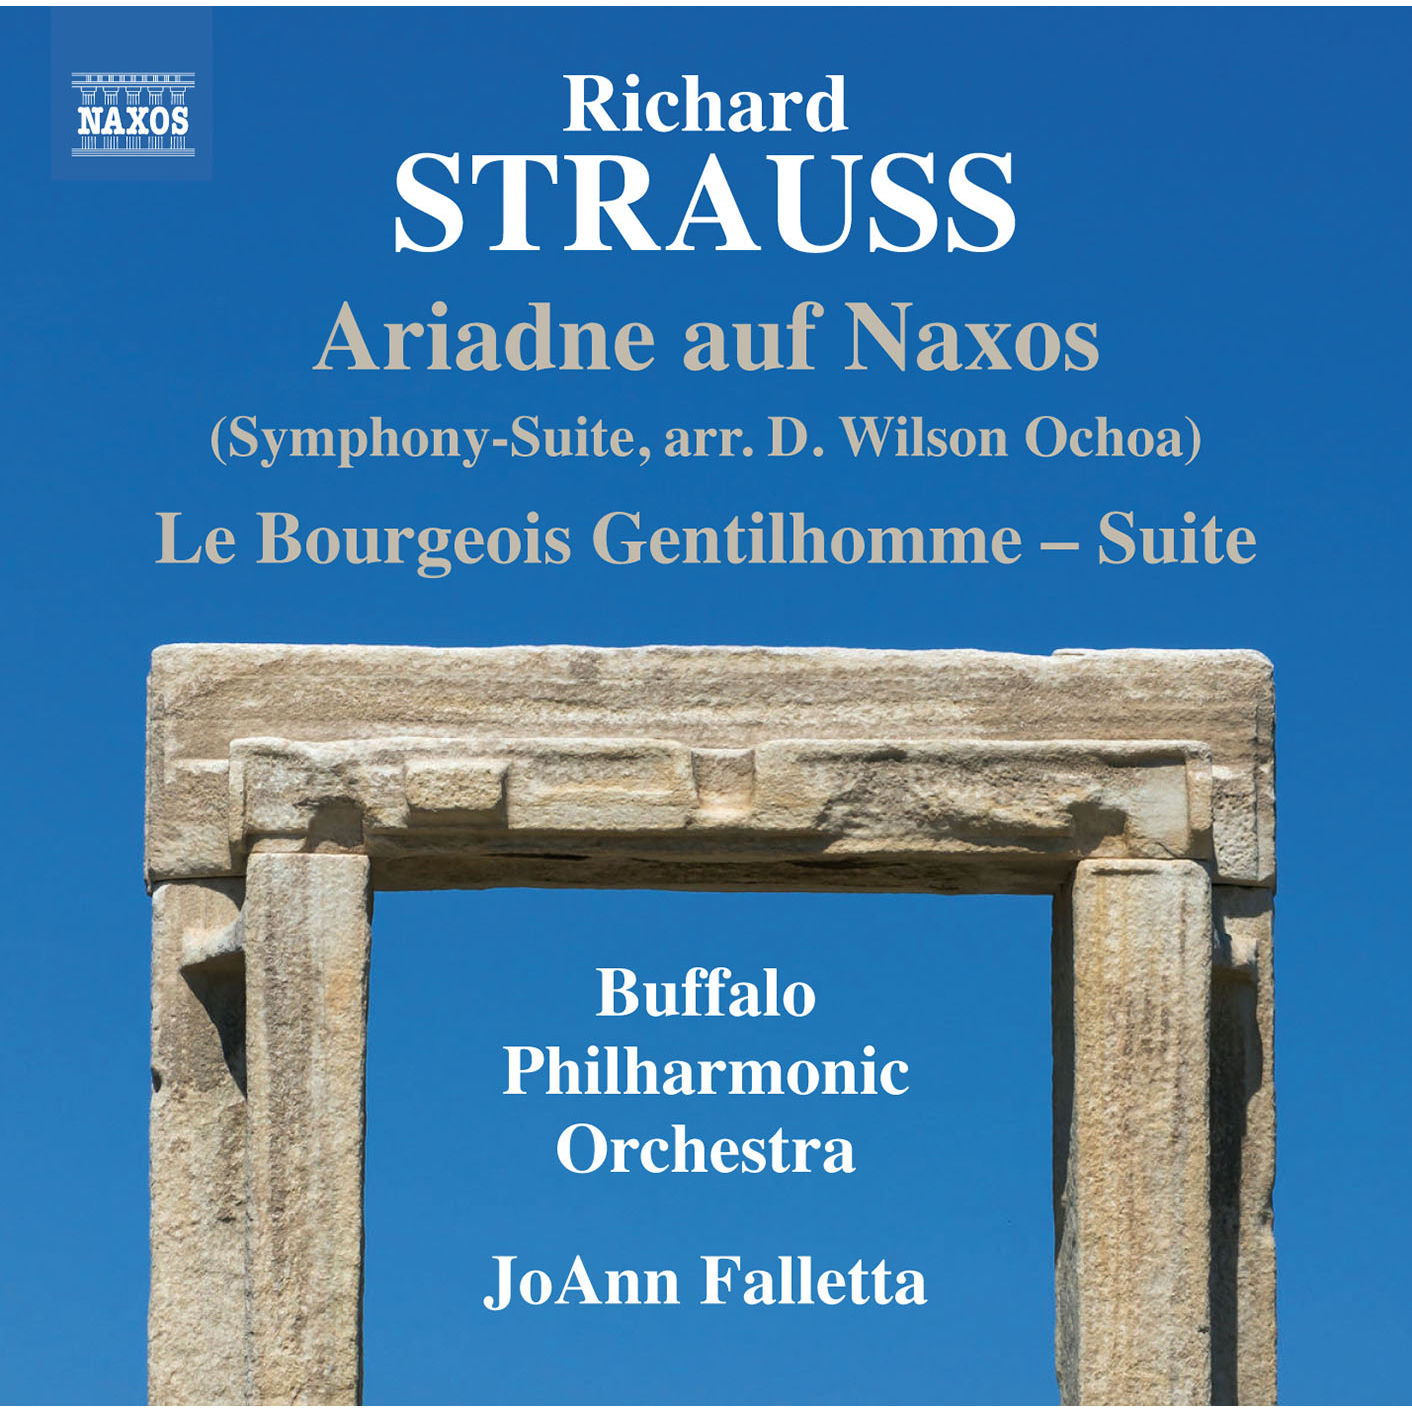 Buffalo Philharmonic Orchestra, JoAnn Falletta - R. Strauss: Le bourgeois gentilhomme Suite & Ariadne auf Naxos, Symphony-suite (2017) [FLAC 24bit/96kHz]